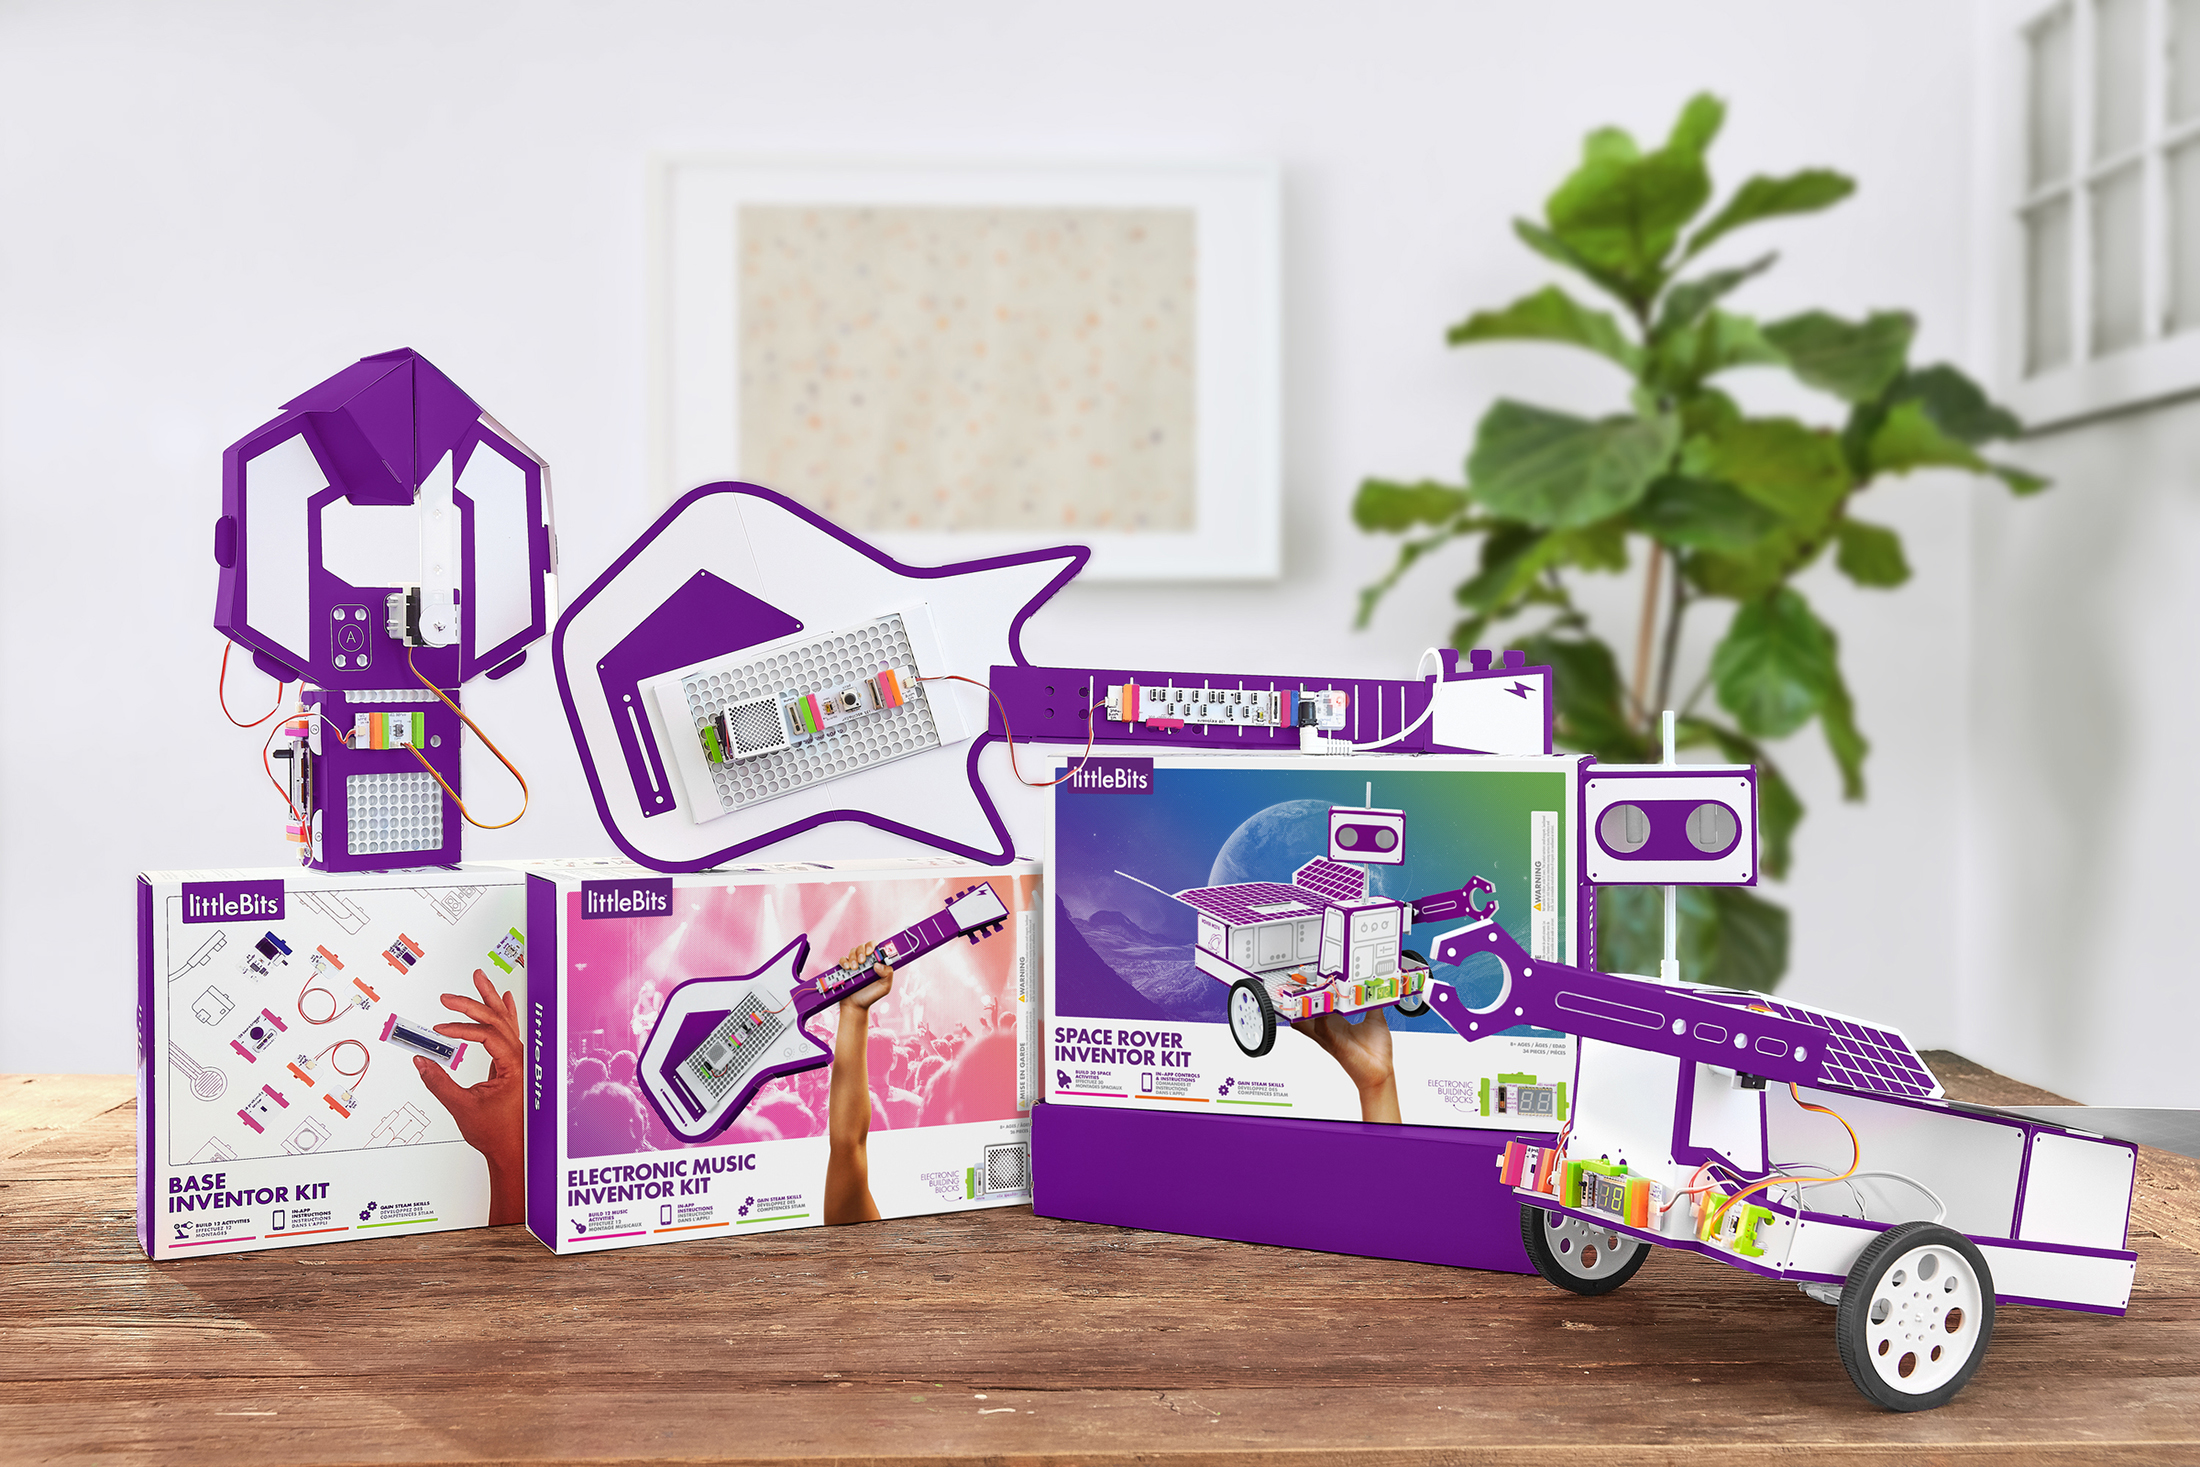 Thumbnail for littleBits Inventor Kits